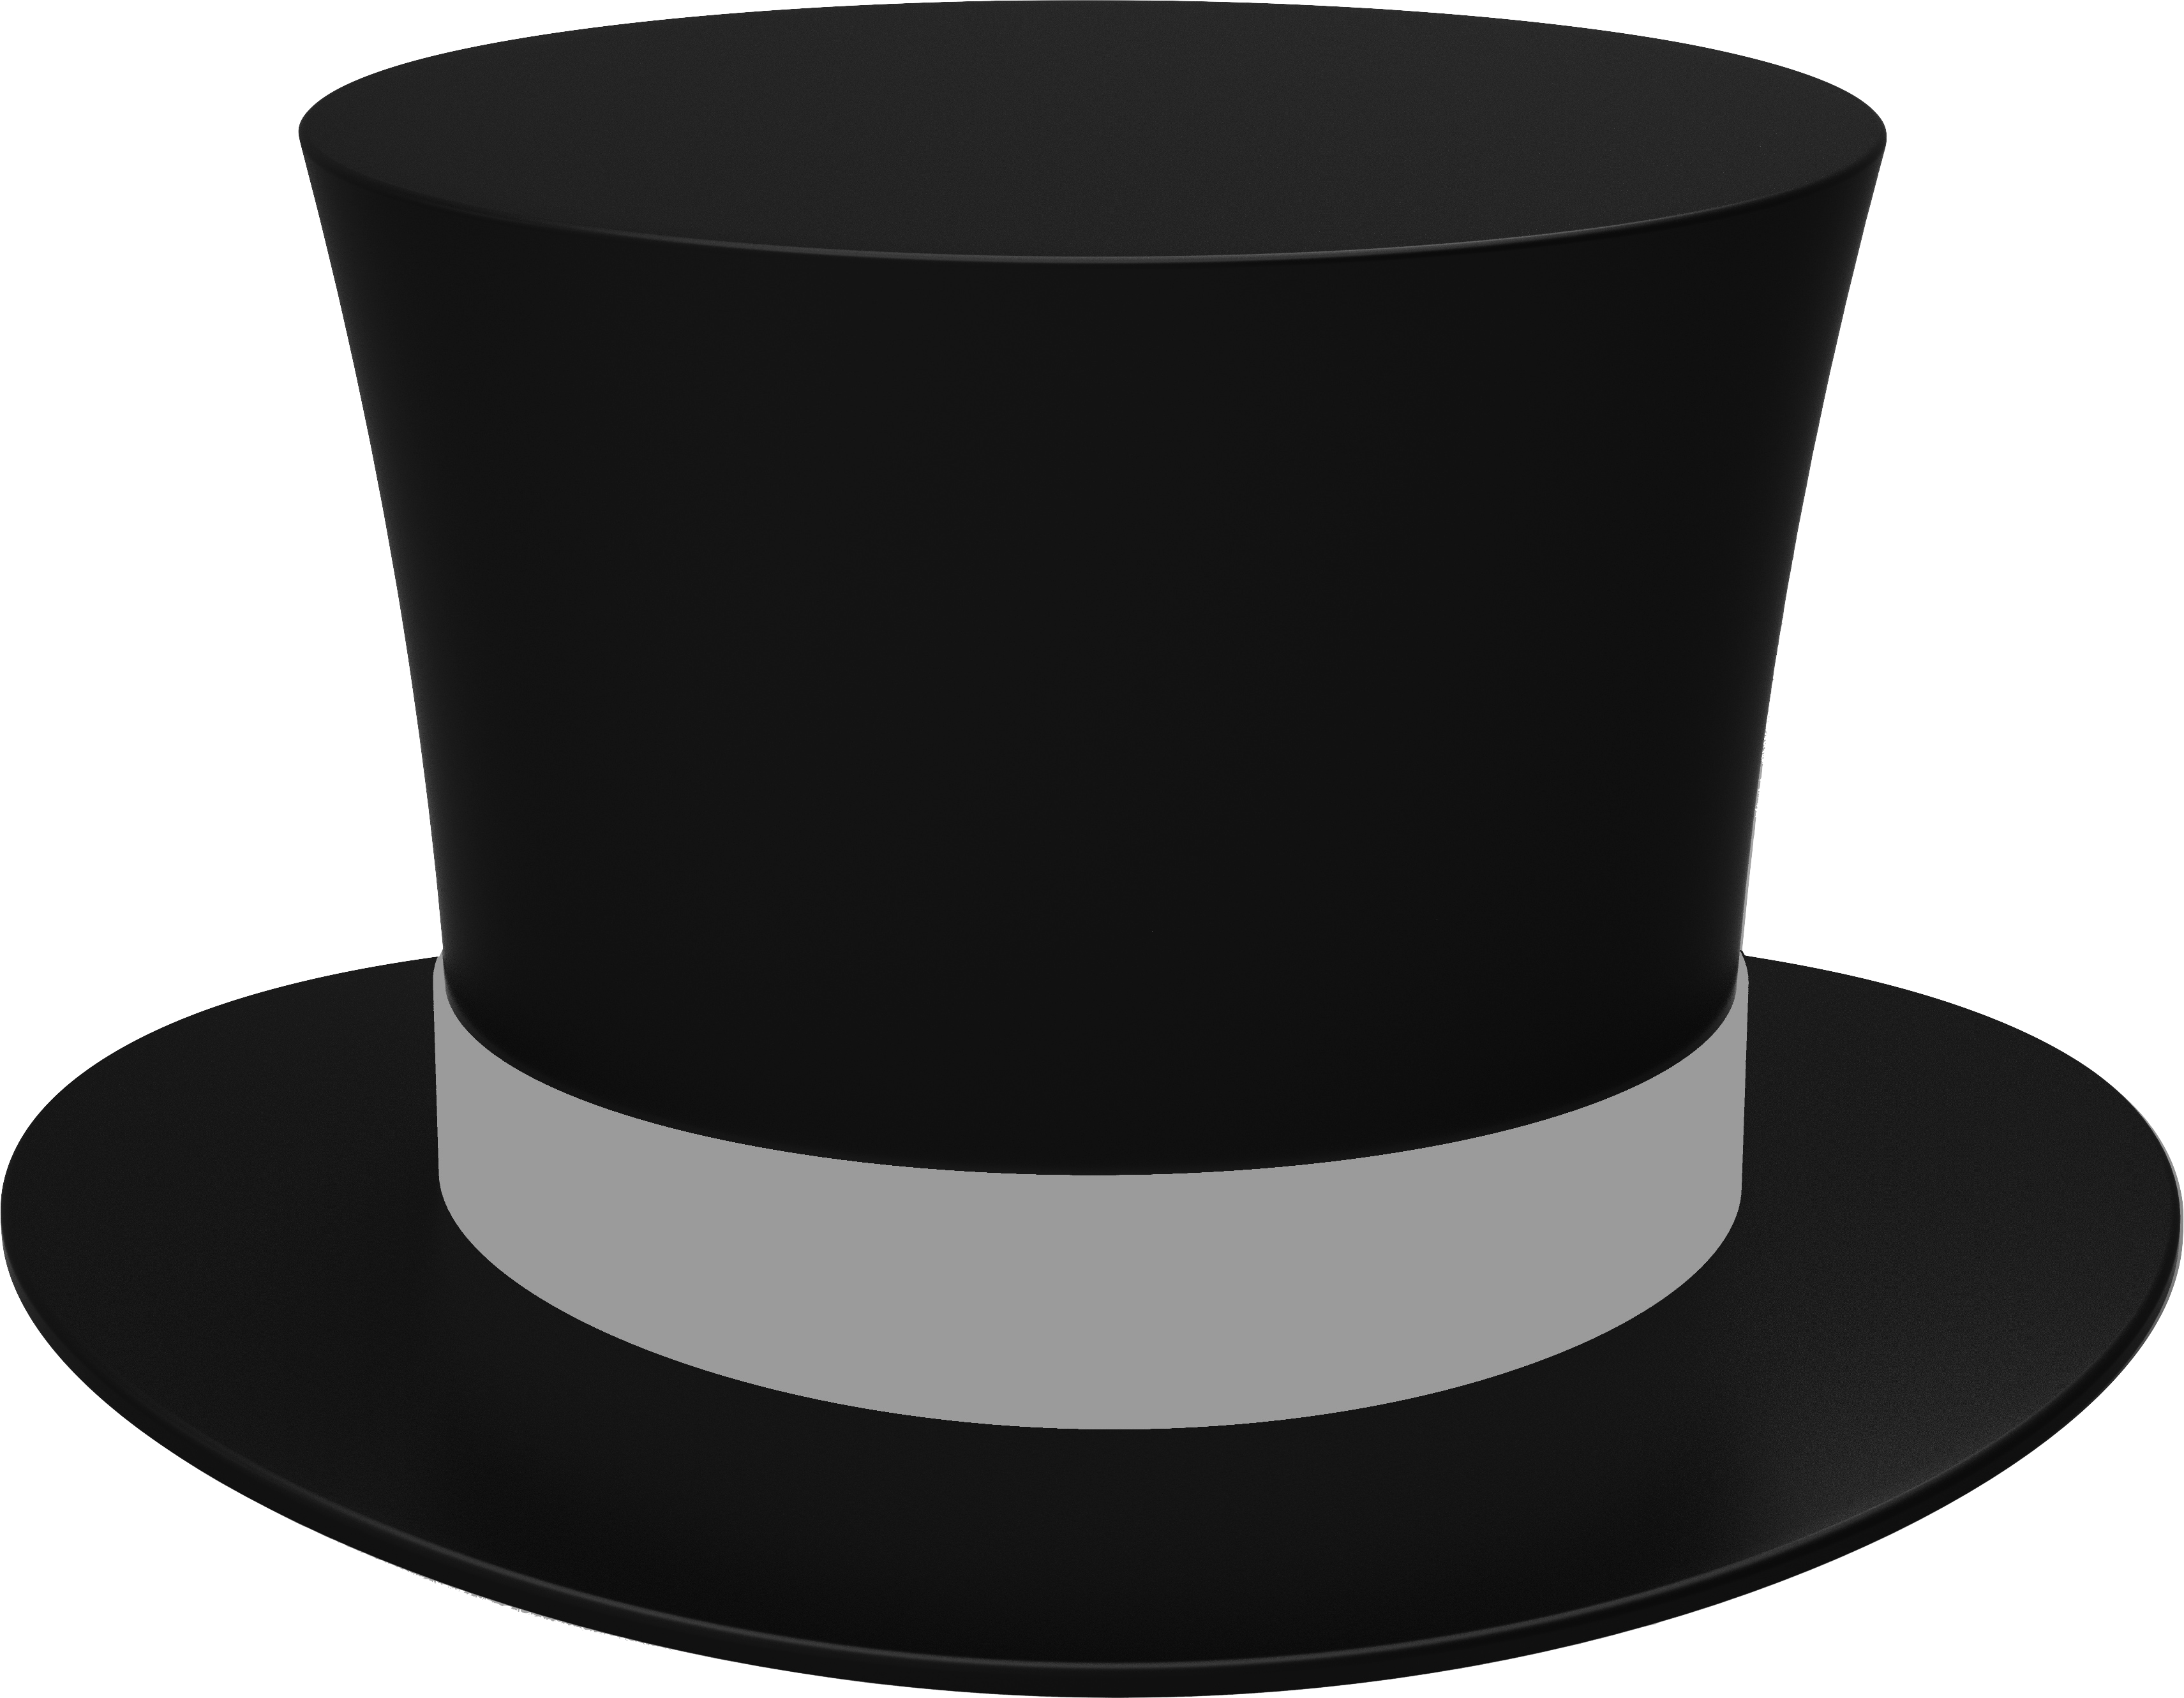 Download PNG image - Magic Black Hat PNG Image 